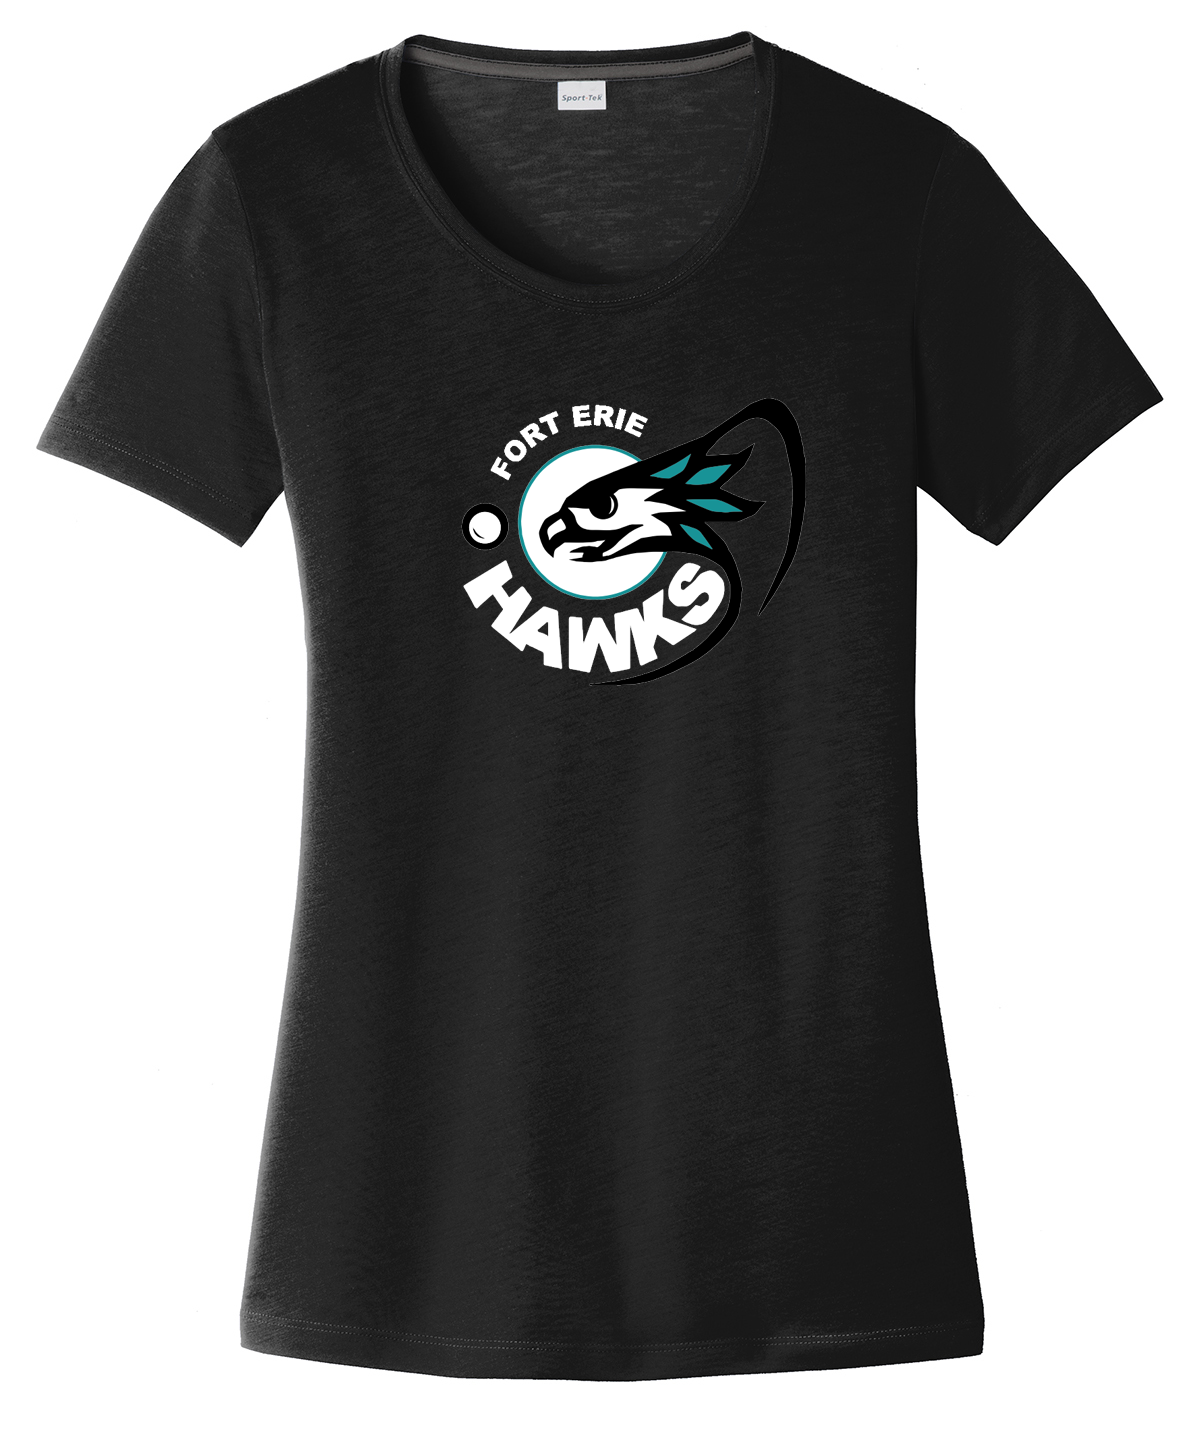 Fort Erie Hawks Black Women's CottonTouch Performance T-Shirt